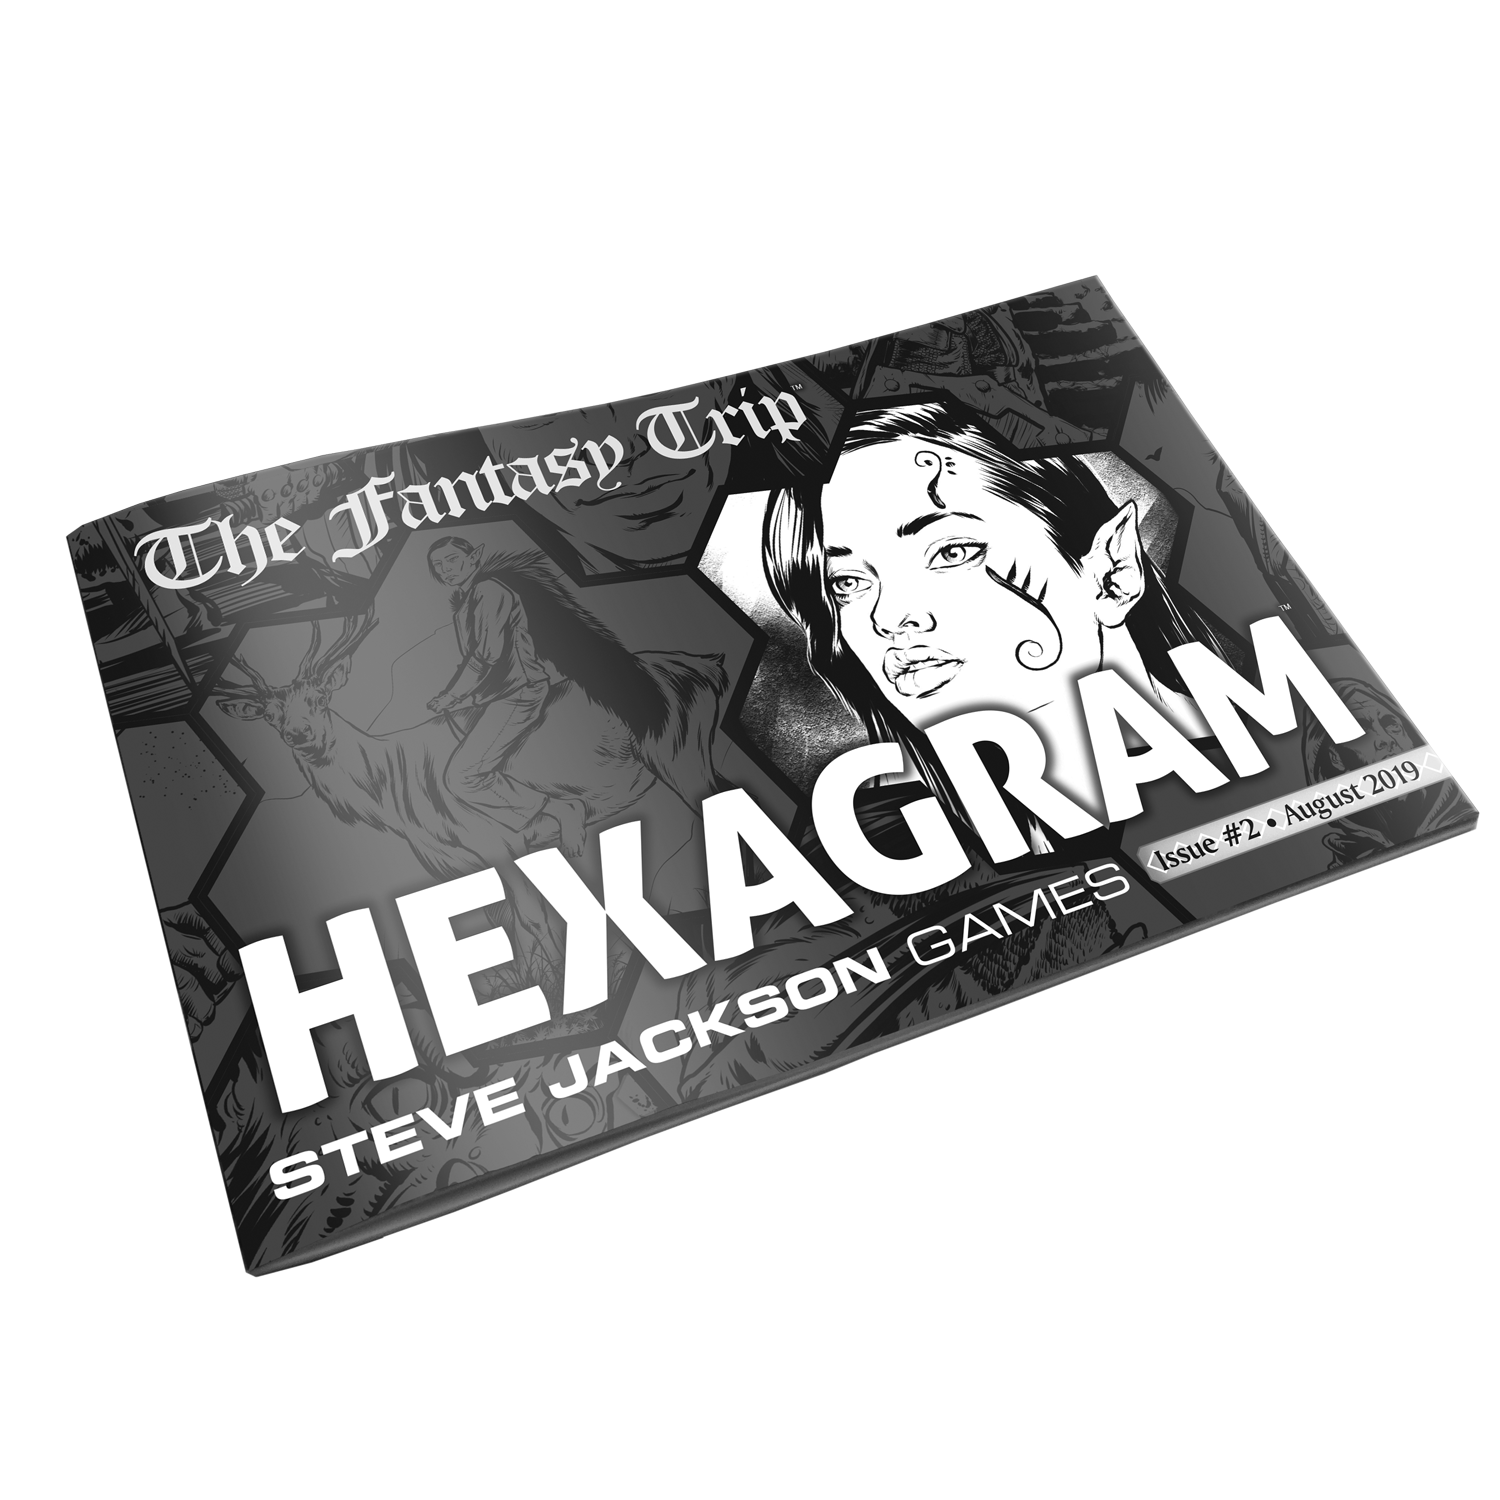 Hexagram – Issue #2